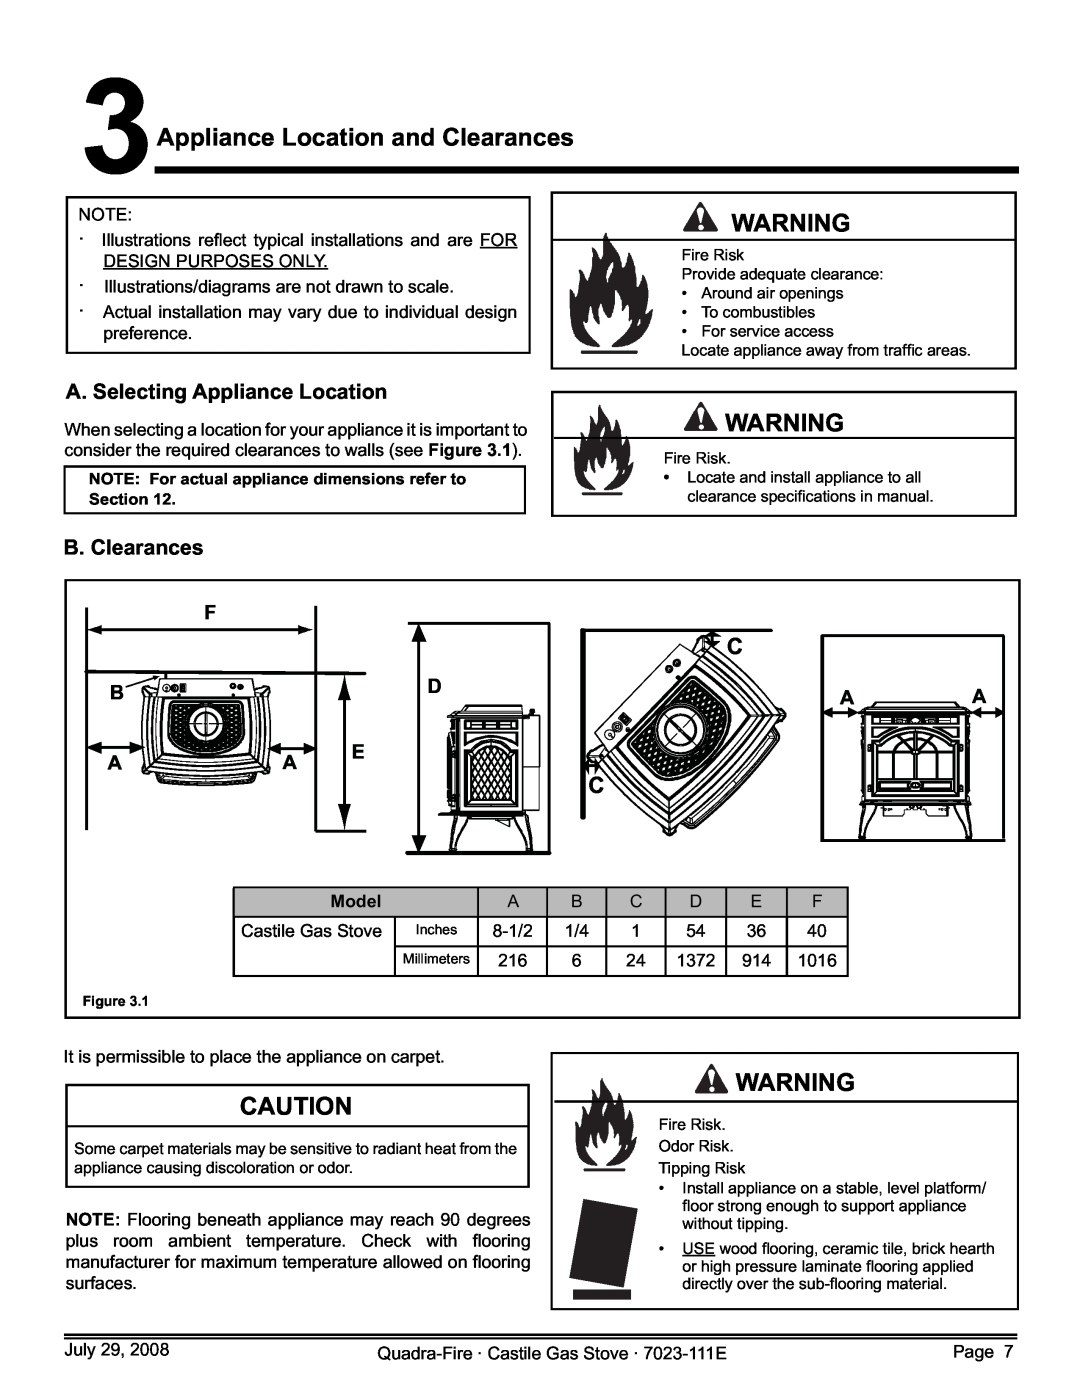 Quadra-Fire CASTILE-GAS-PMH, 7023-111E A. Selecting Appliance Location, B. Clearances, Appliance Location and Clearances 